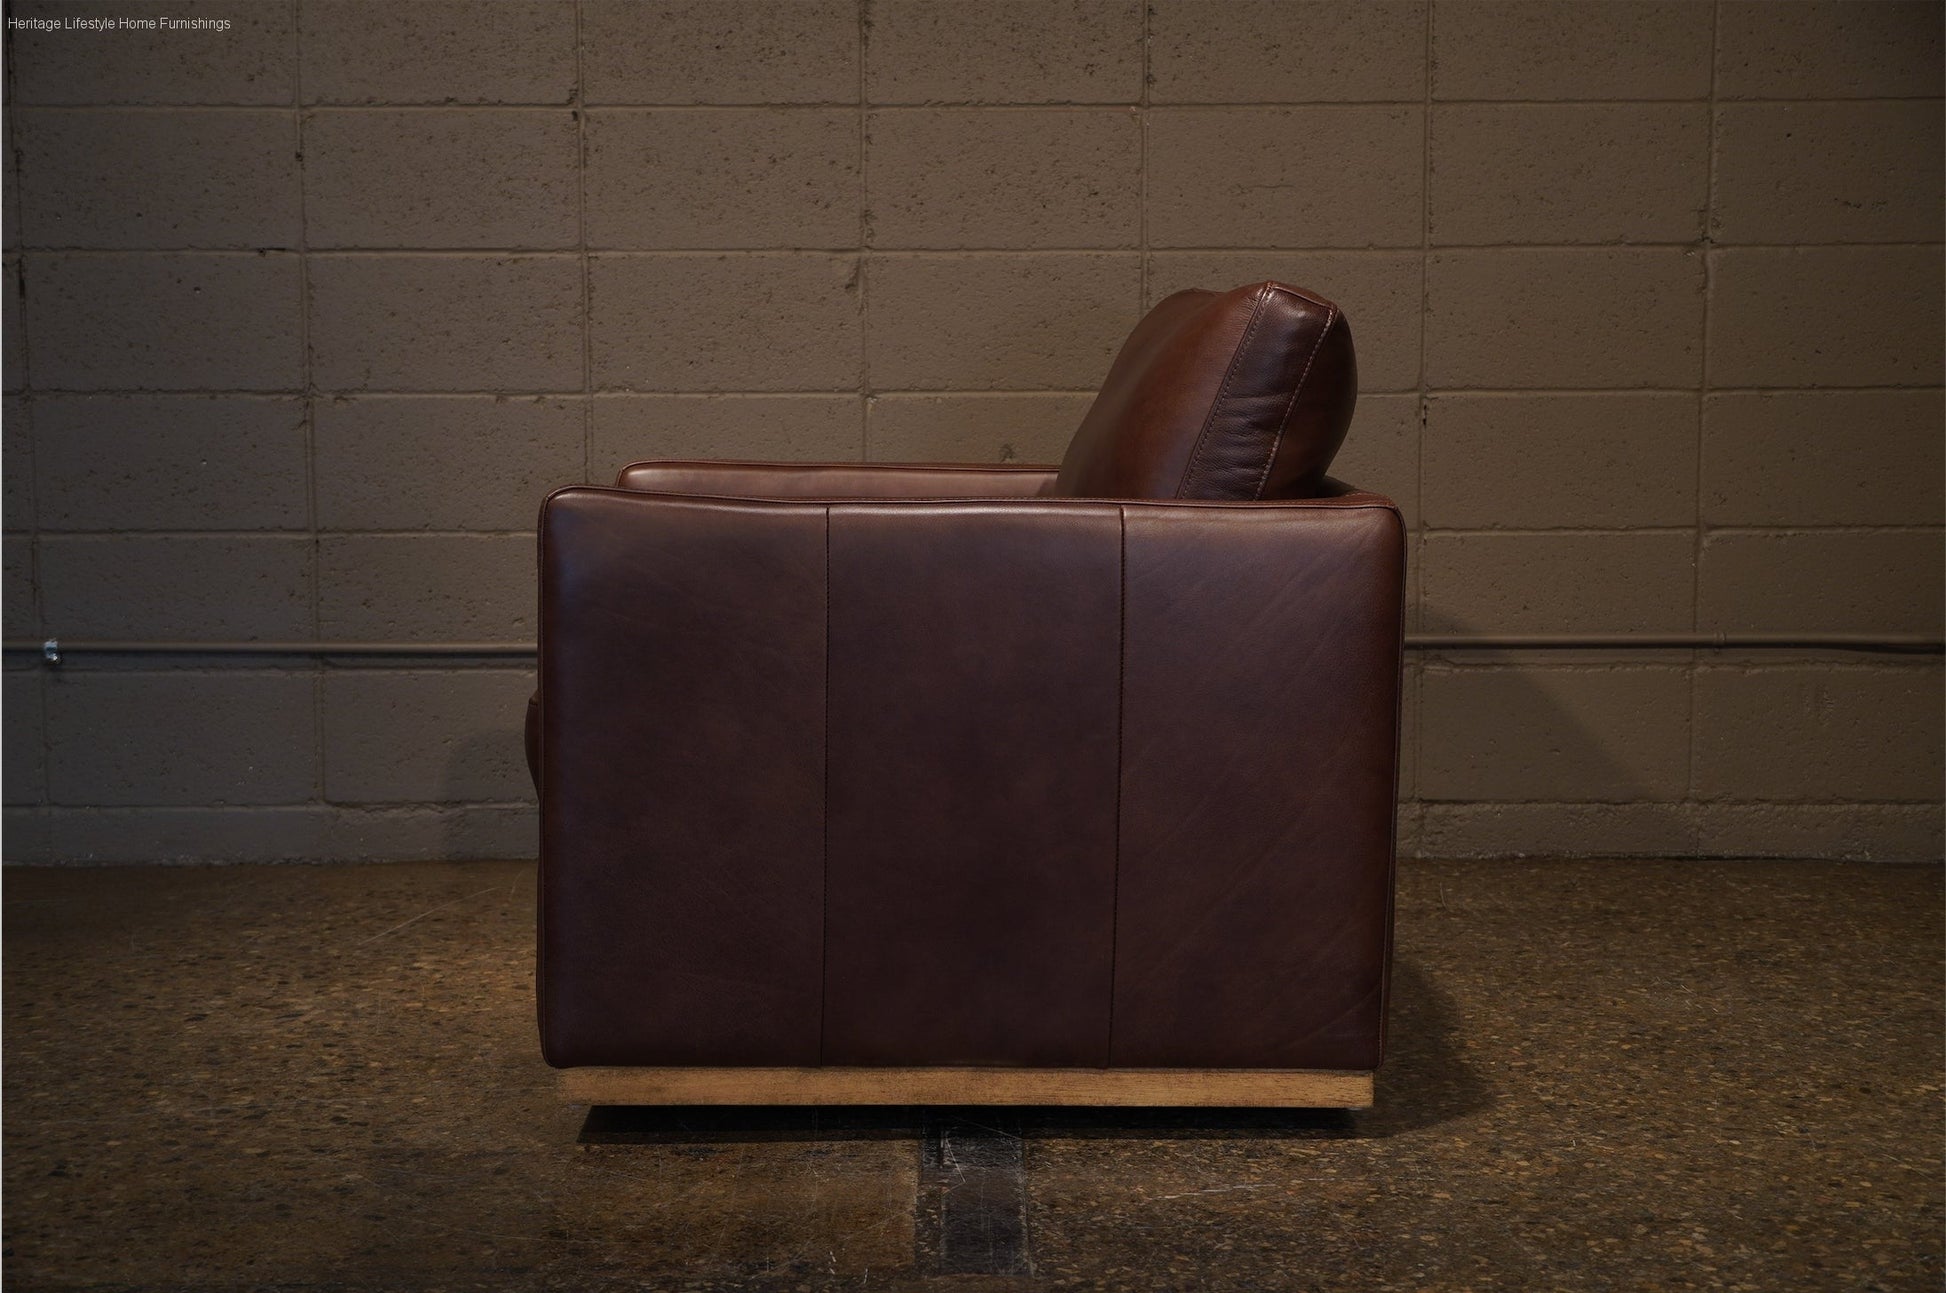 HLHF Club Swivel Accent Chair - Deep Tan Accent Chairs, Living Furniture Store Burlington Ontario Near Me 